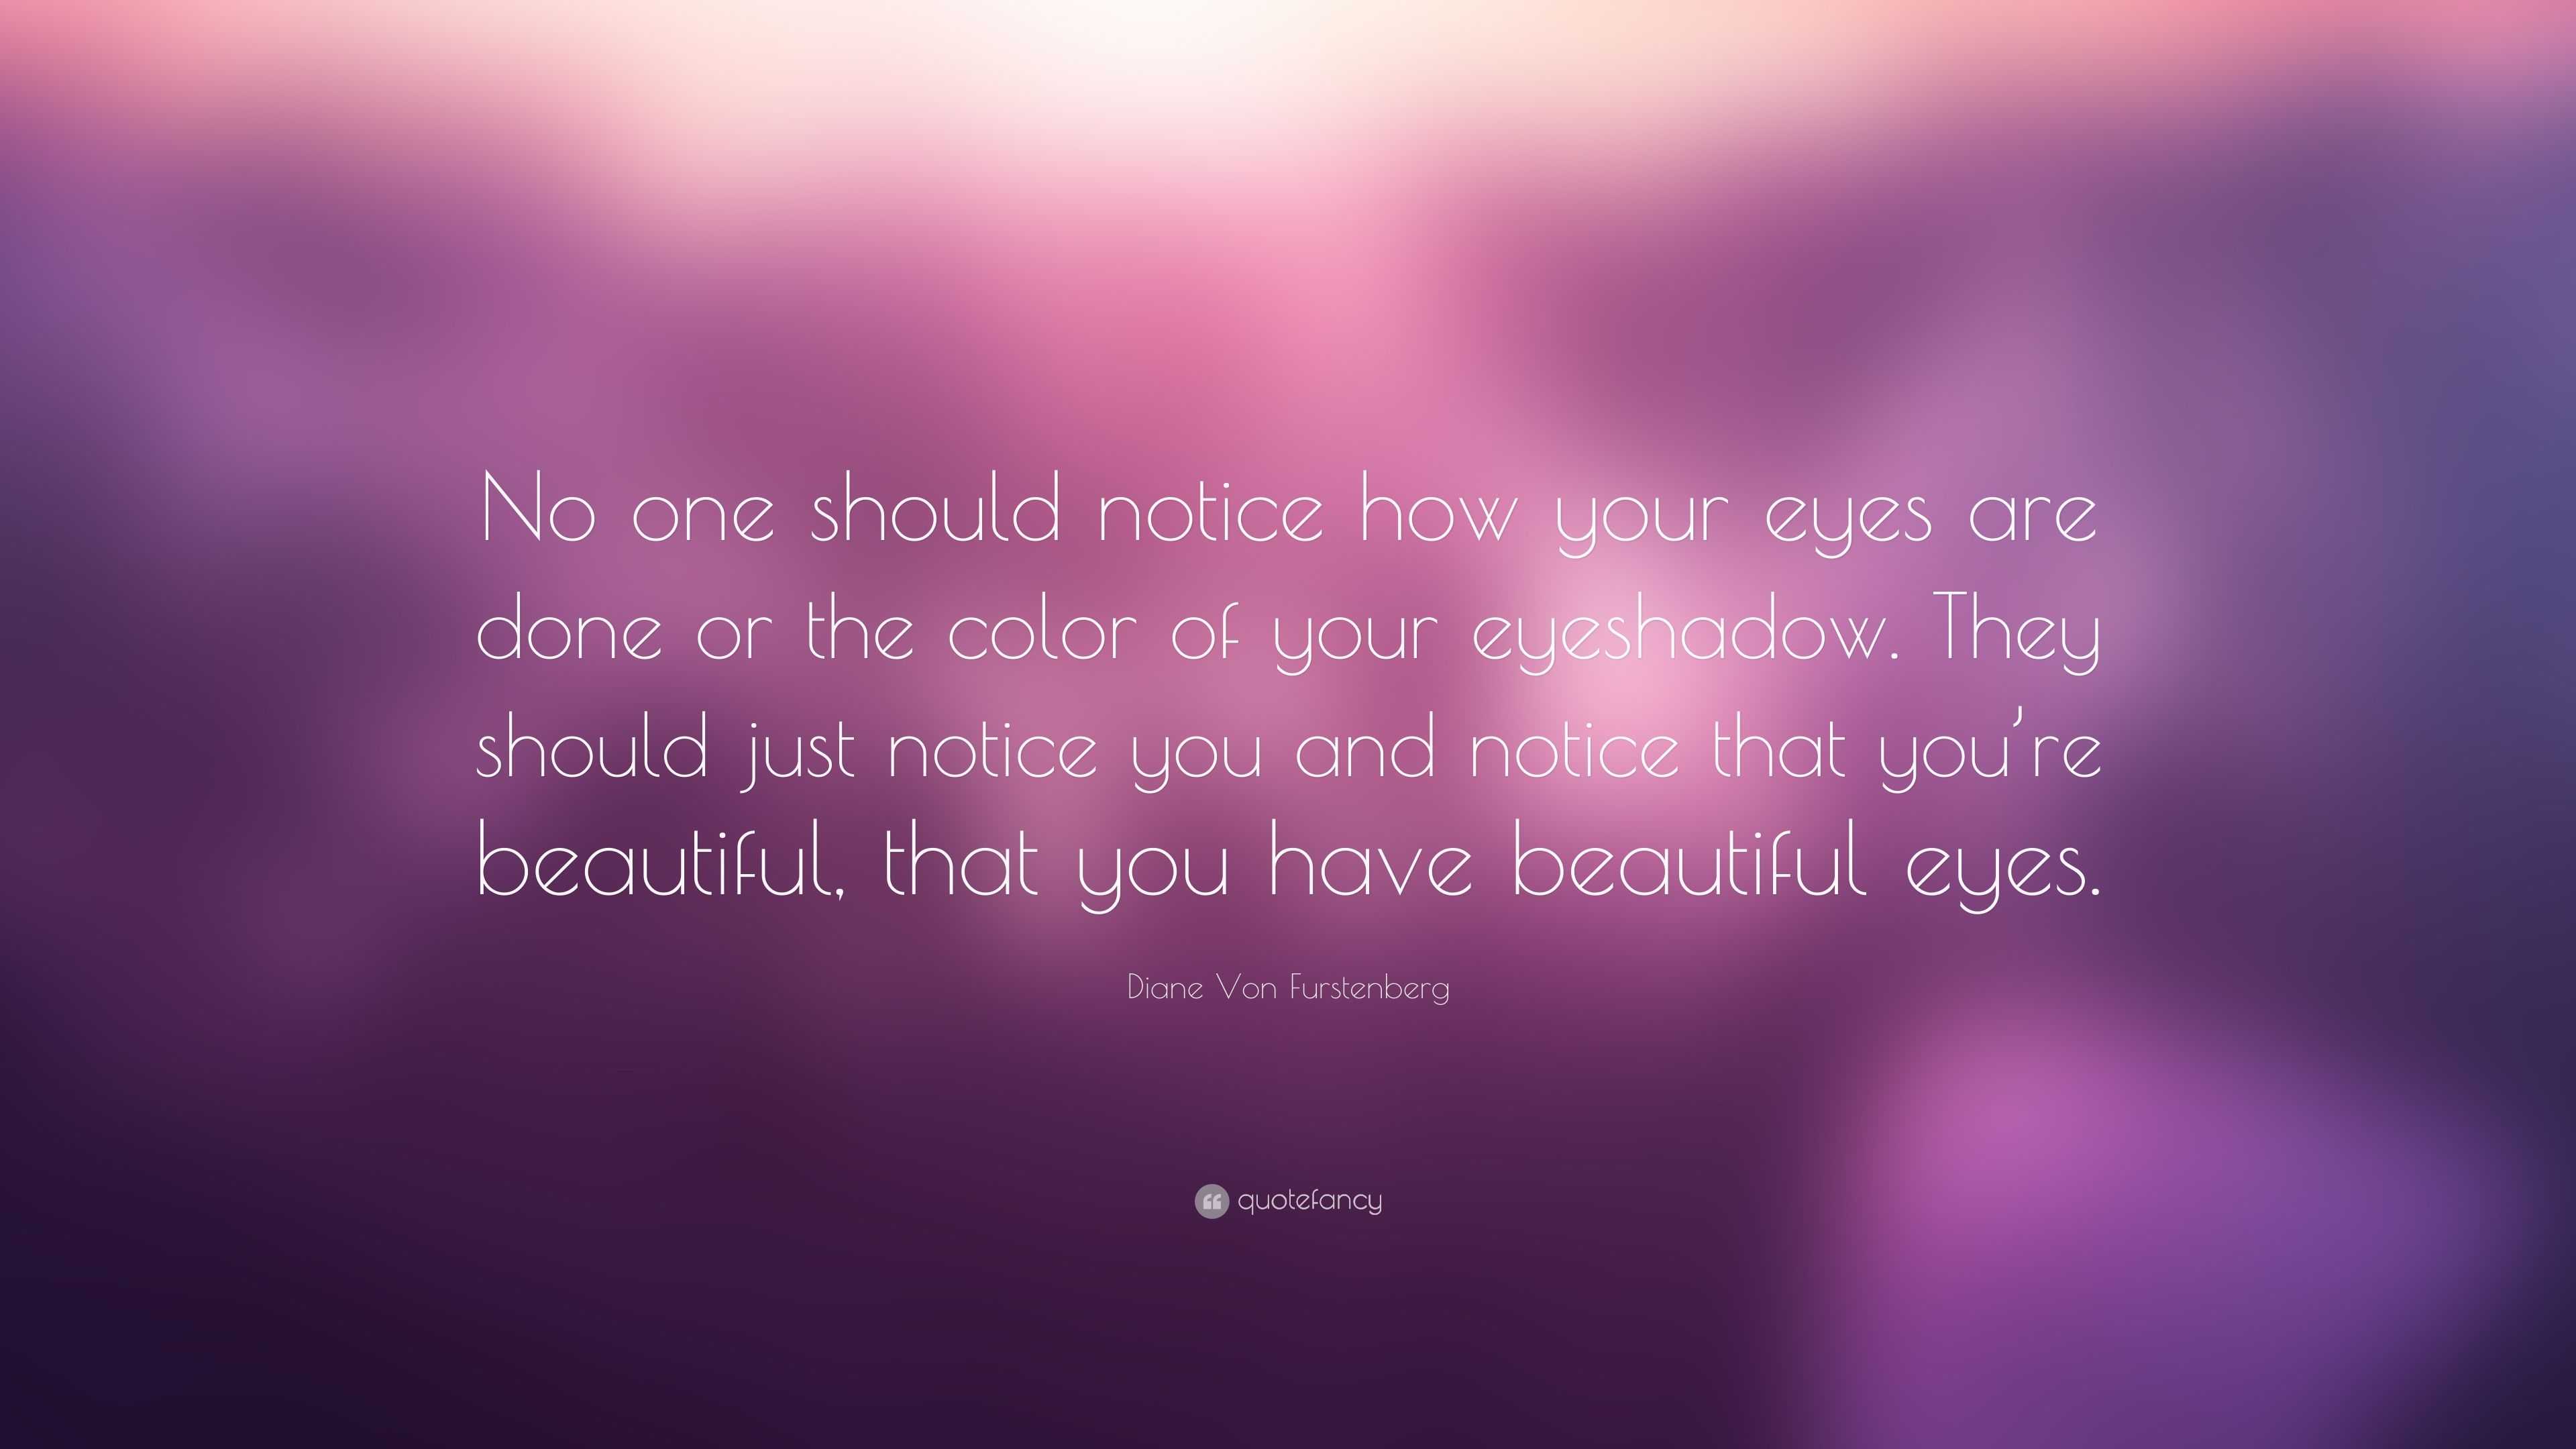 Diane Von Furstenberg Quote: “No one should notice how your eyes are ...